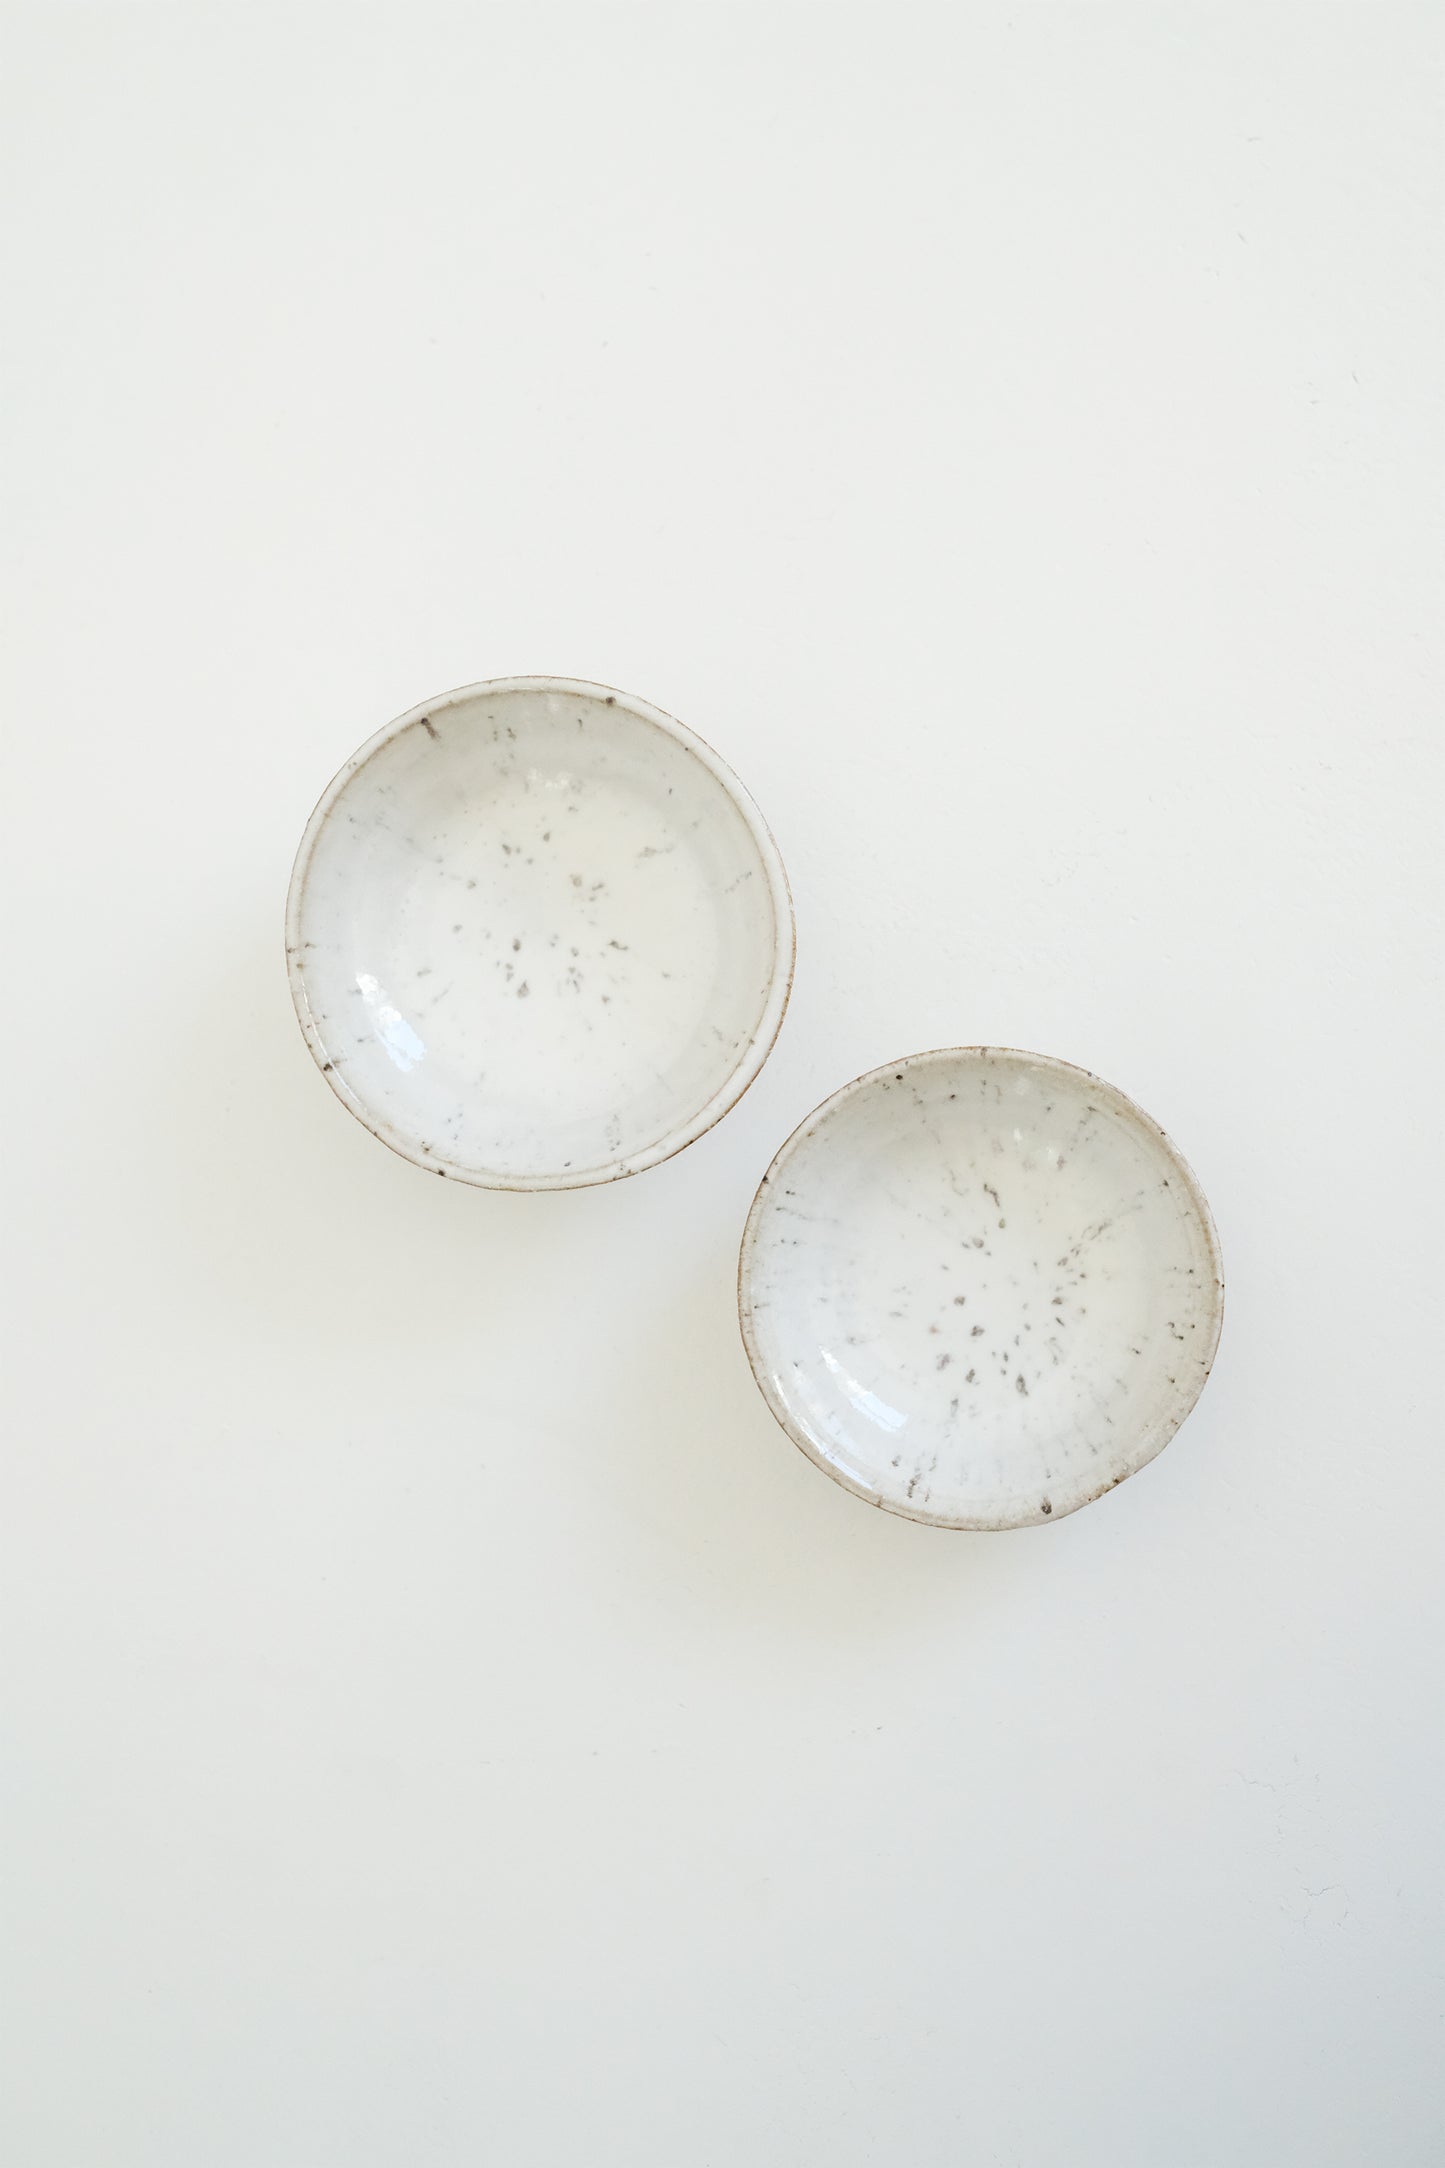 pinch bowls #2 - set of 2